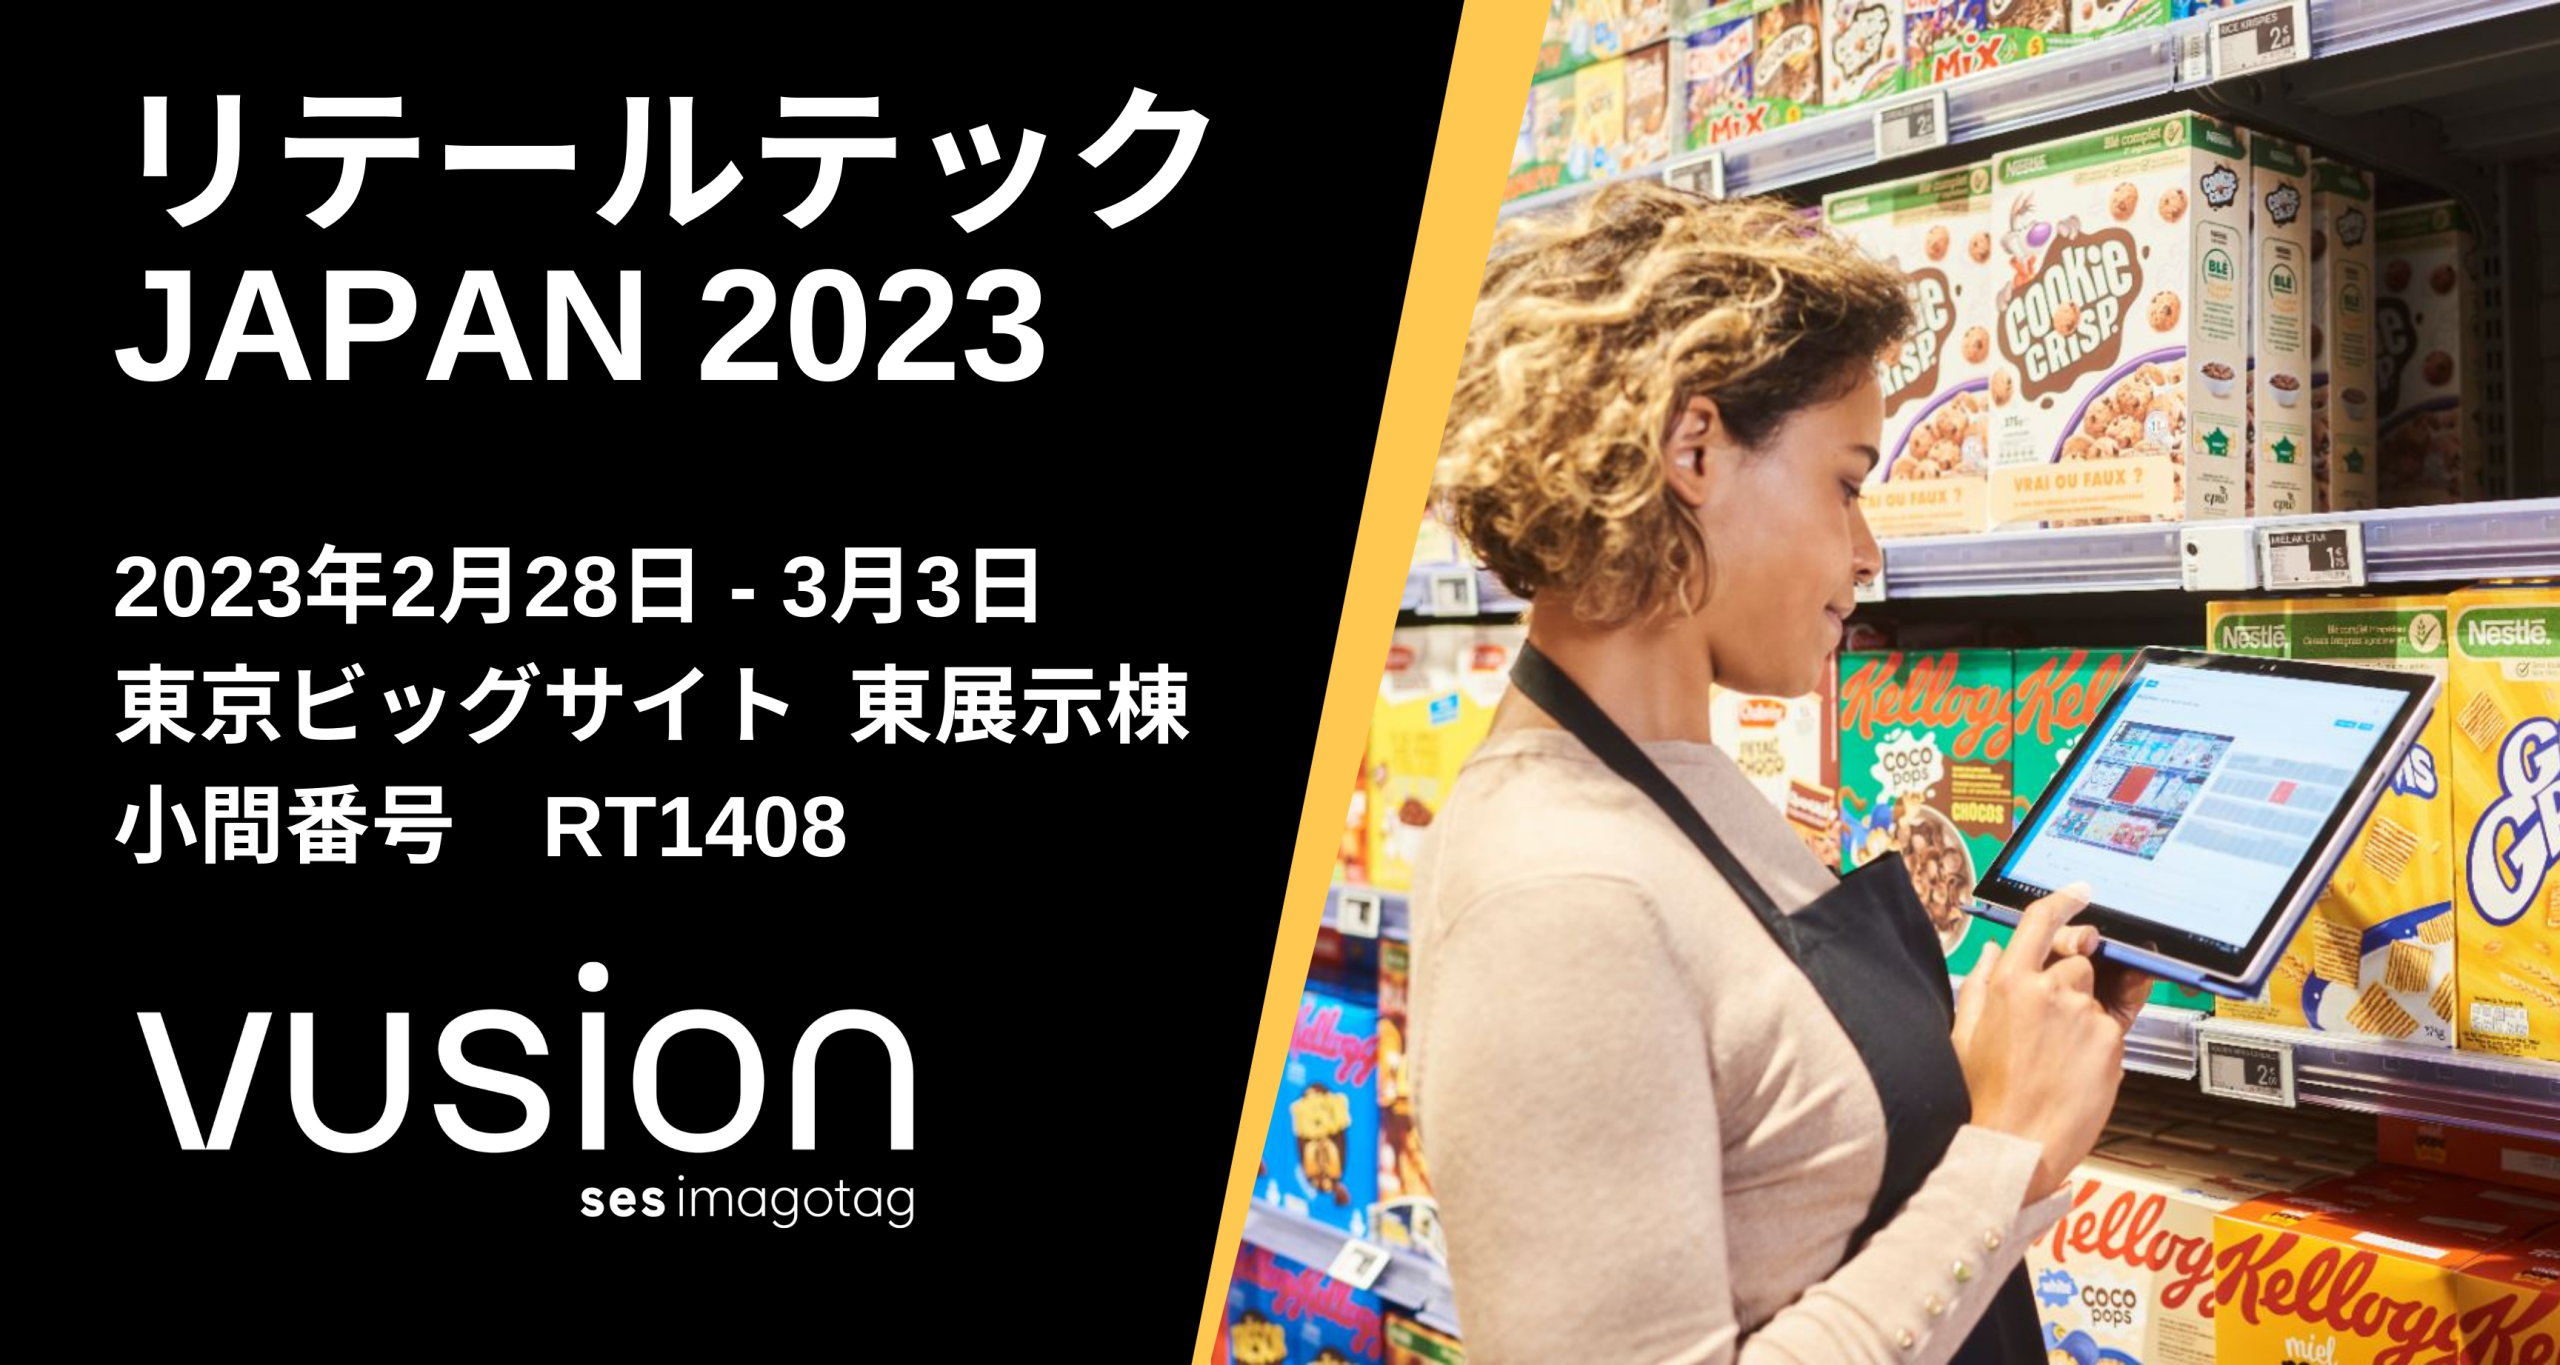 Meet SES-imagotag at Retail Tech Japan 2023